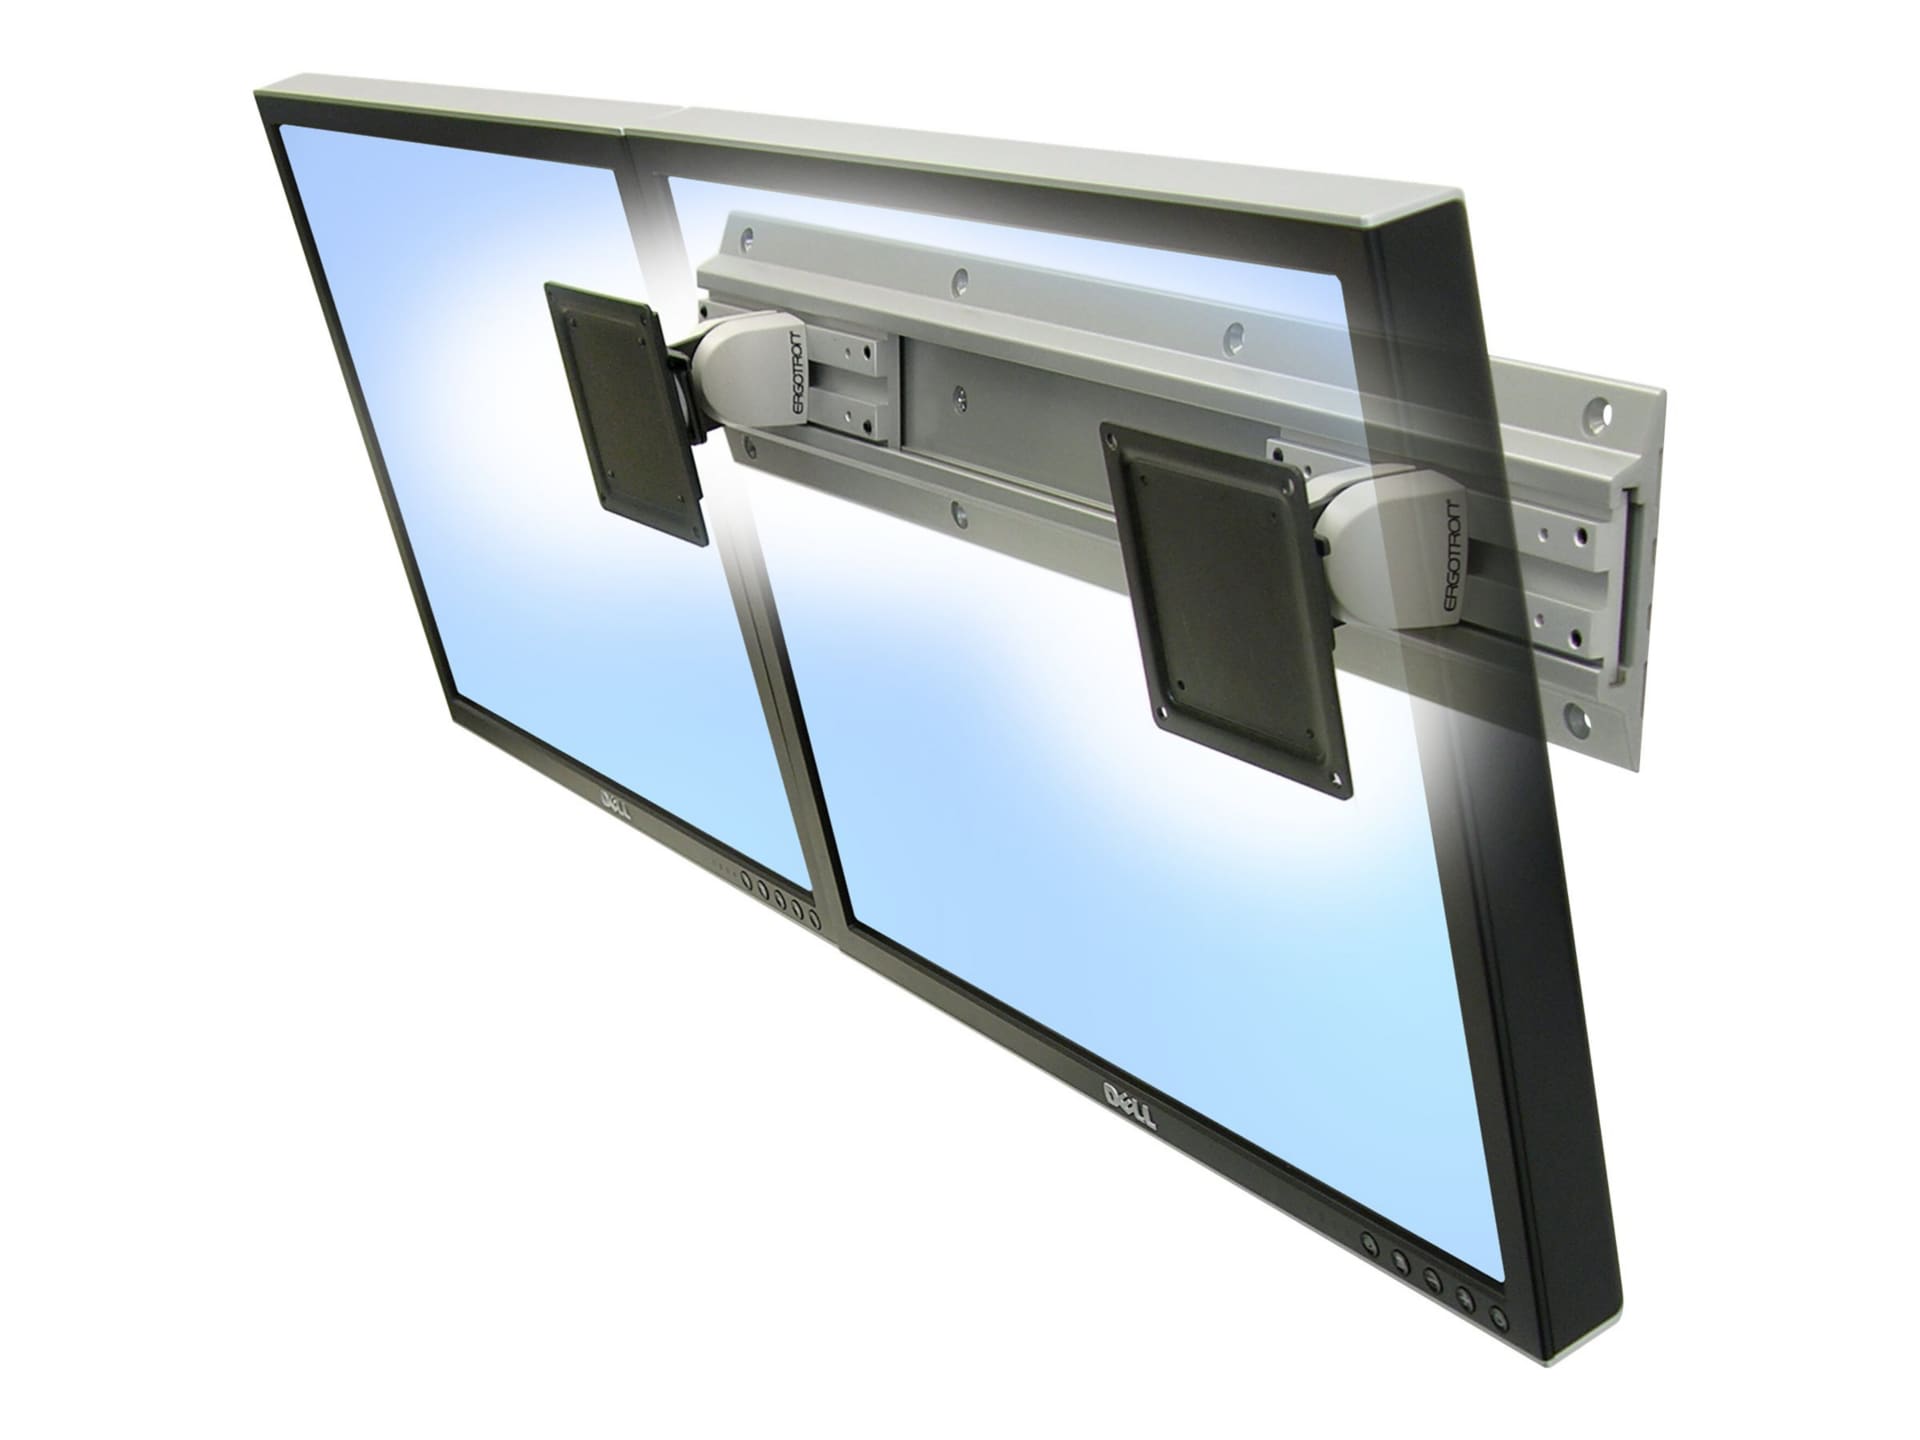 Ergotron Neo-Flex mounting kit - low profile - for 2 LCD displays - gray, b